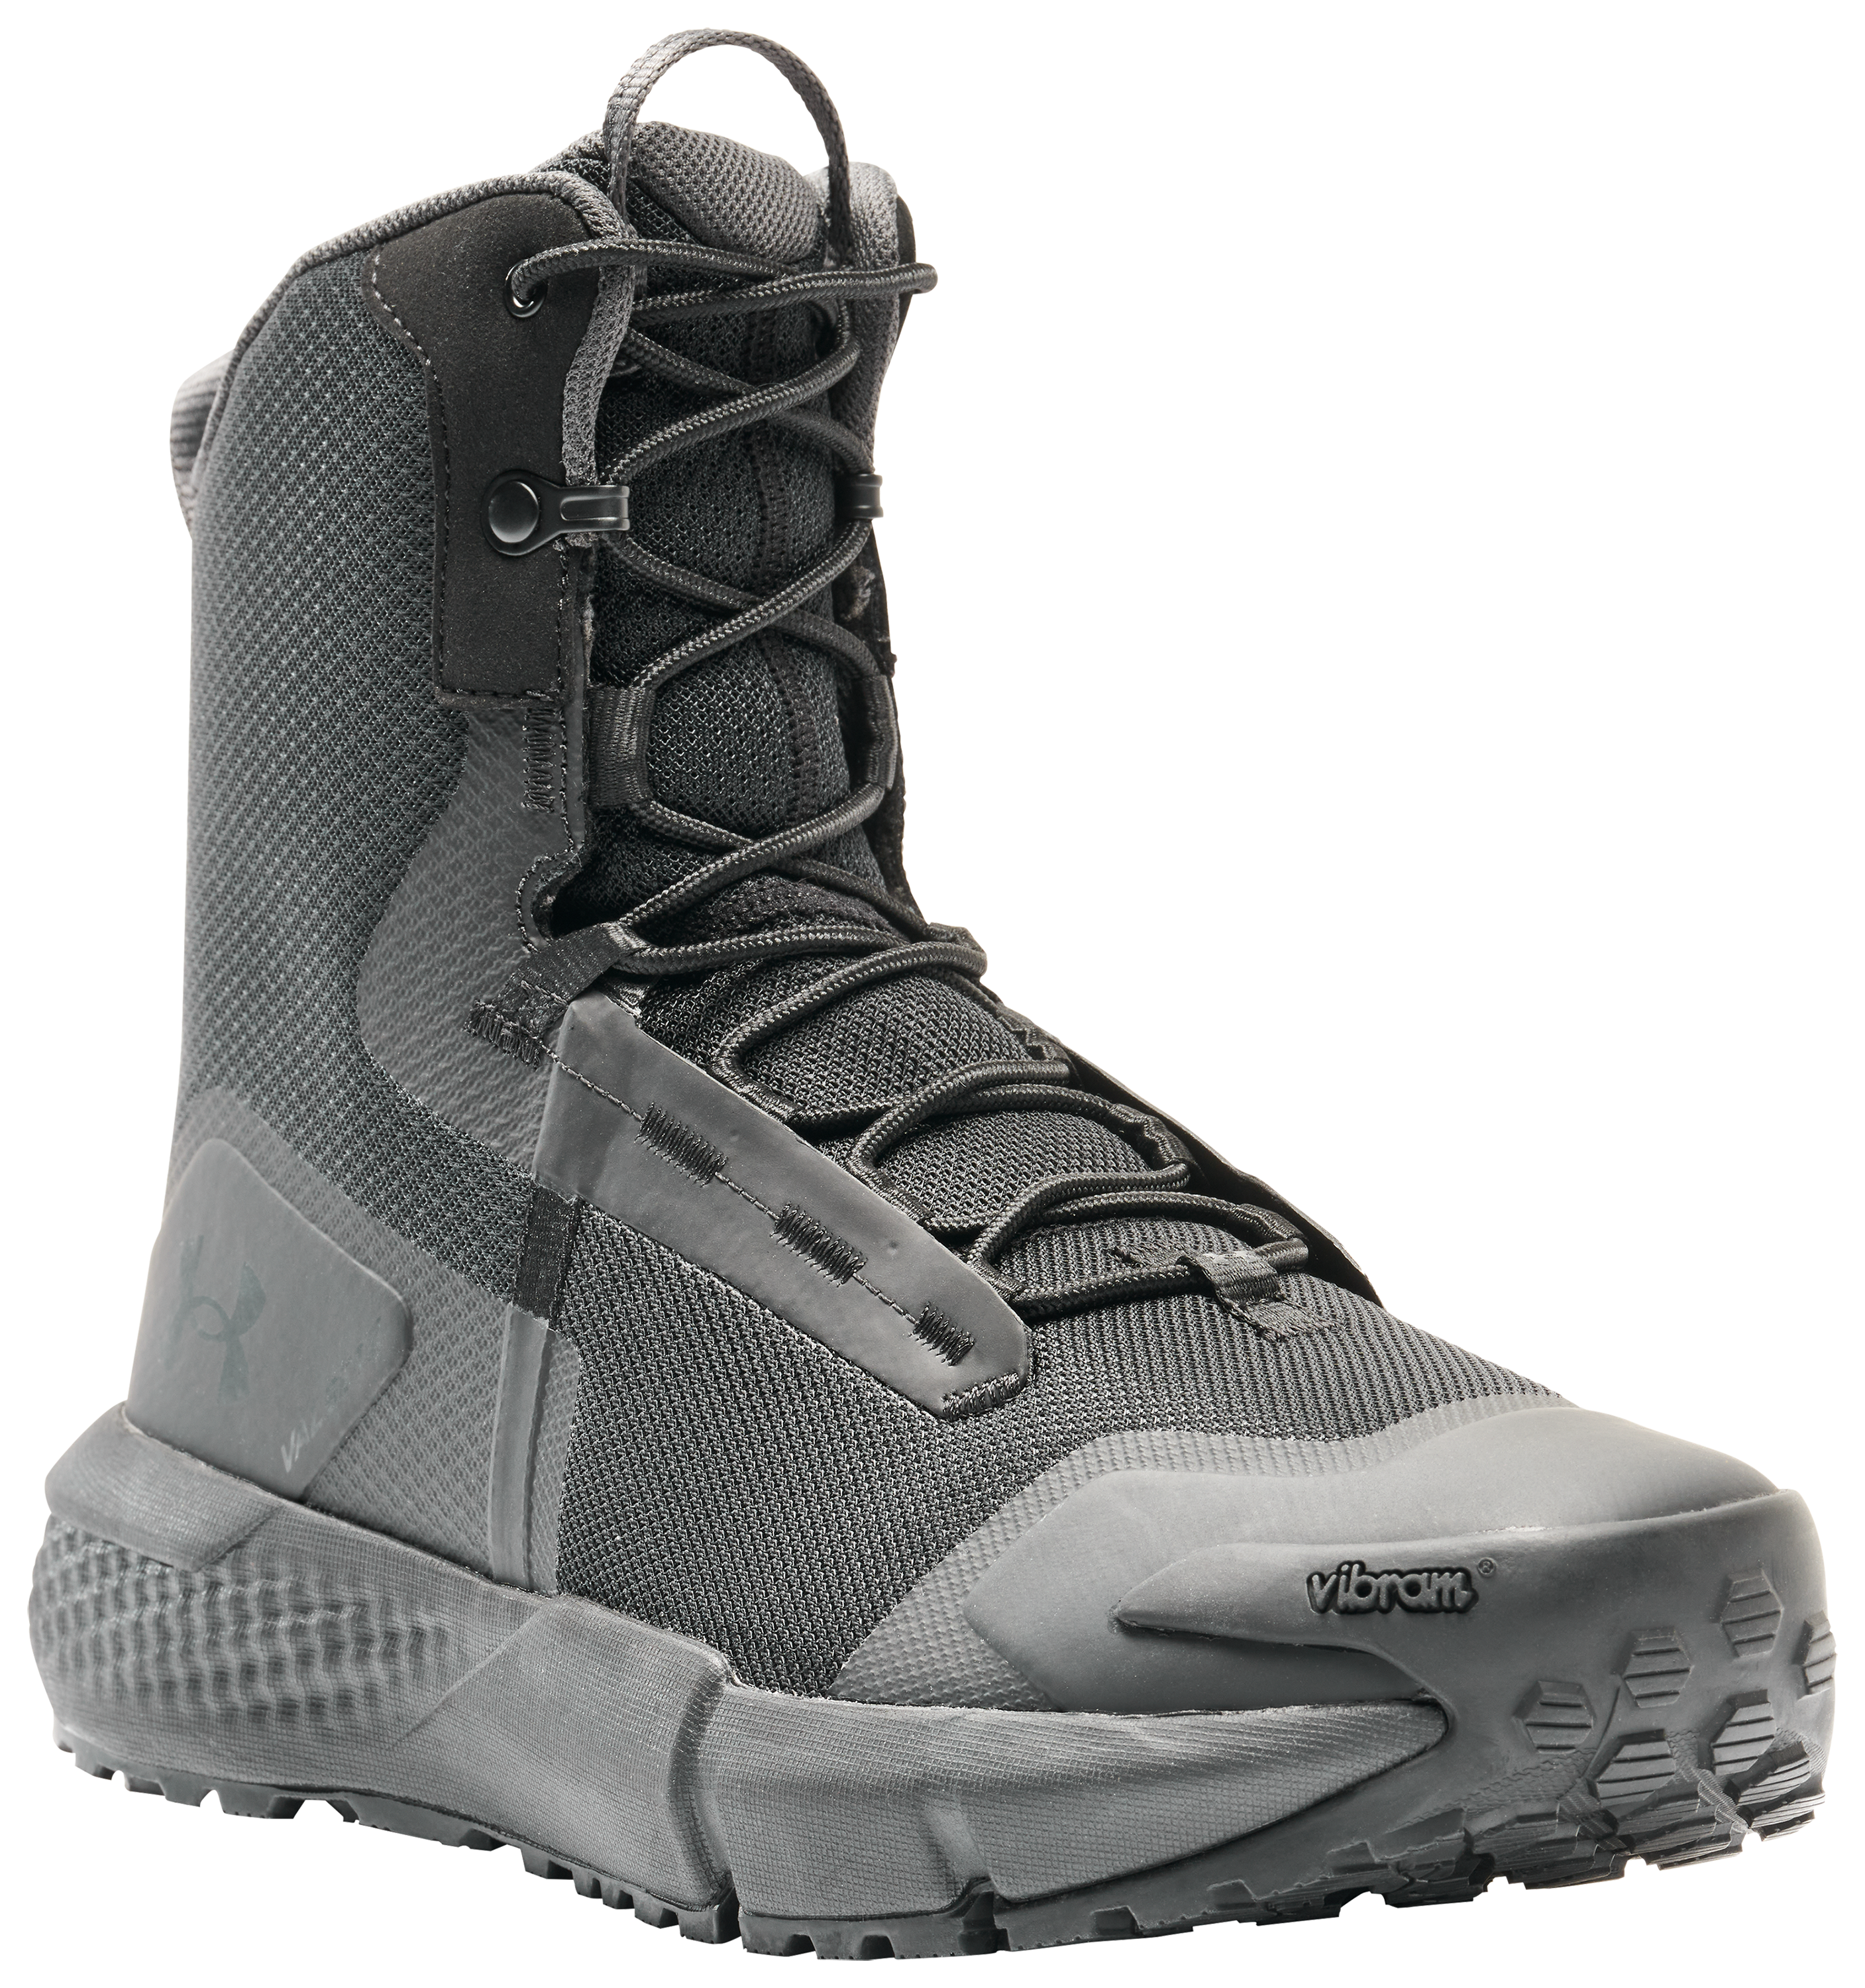 Under Armour Valsetz Side Zip Tactical Boots for Men - Black - 14M